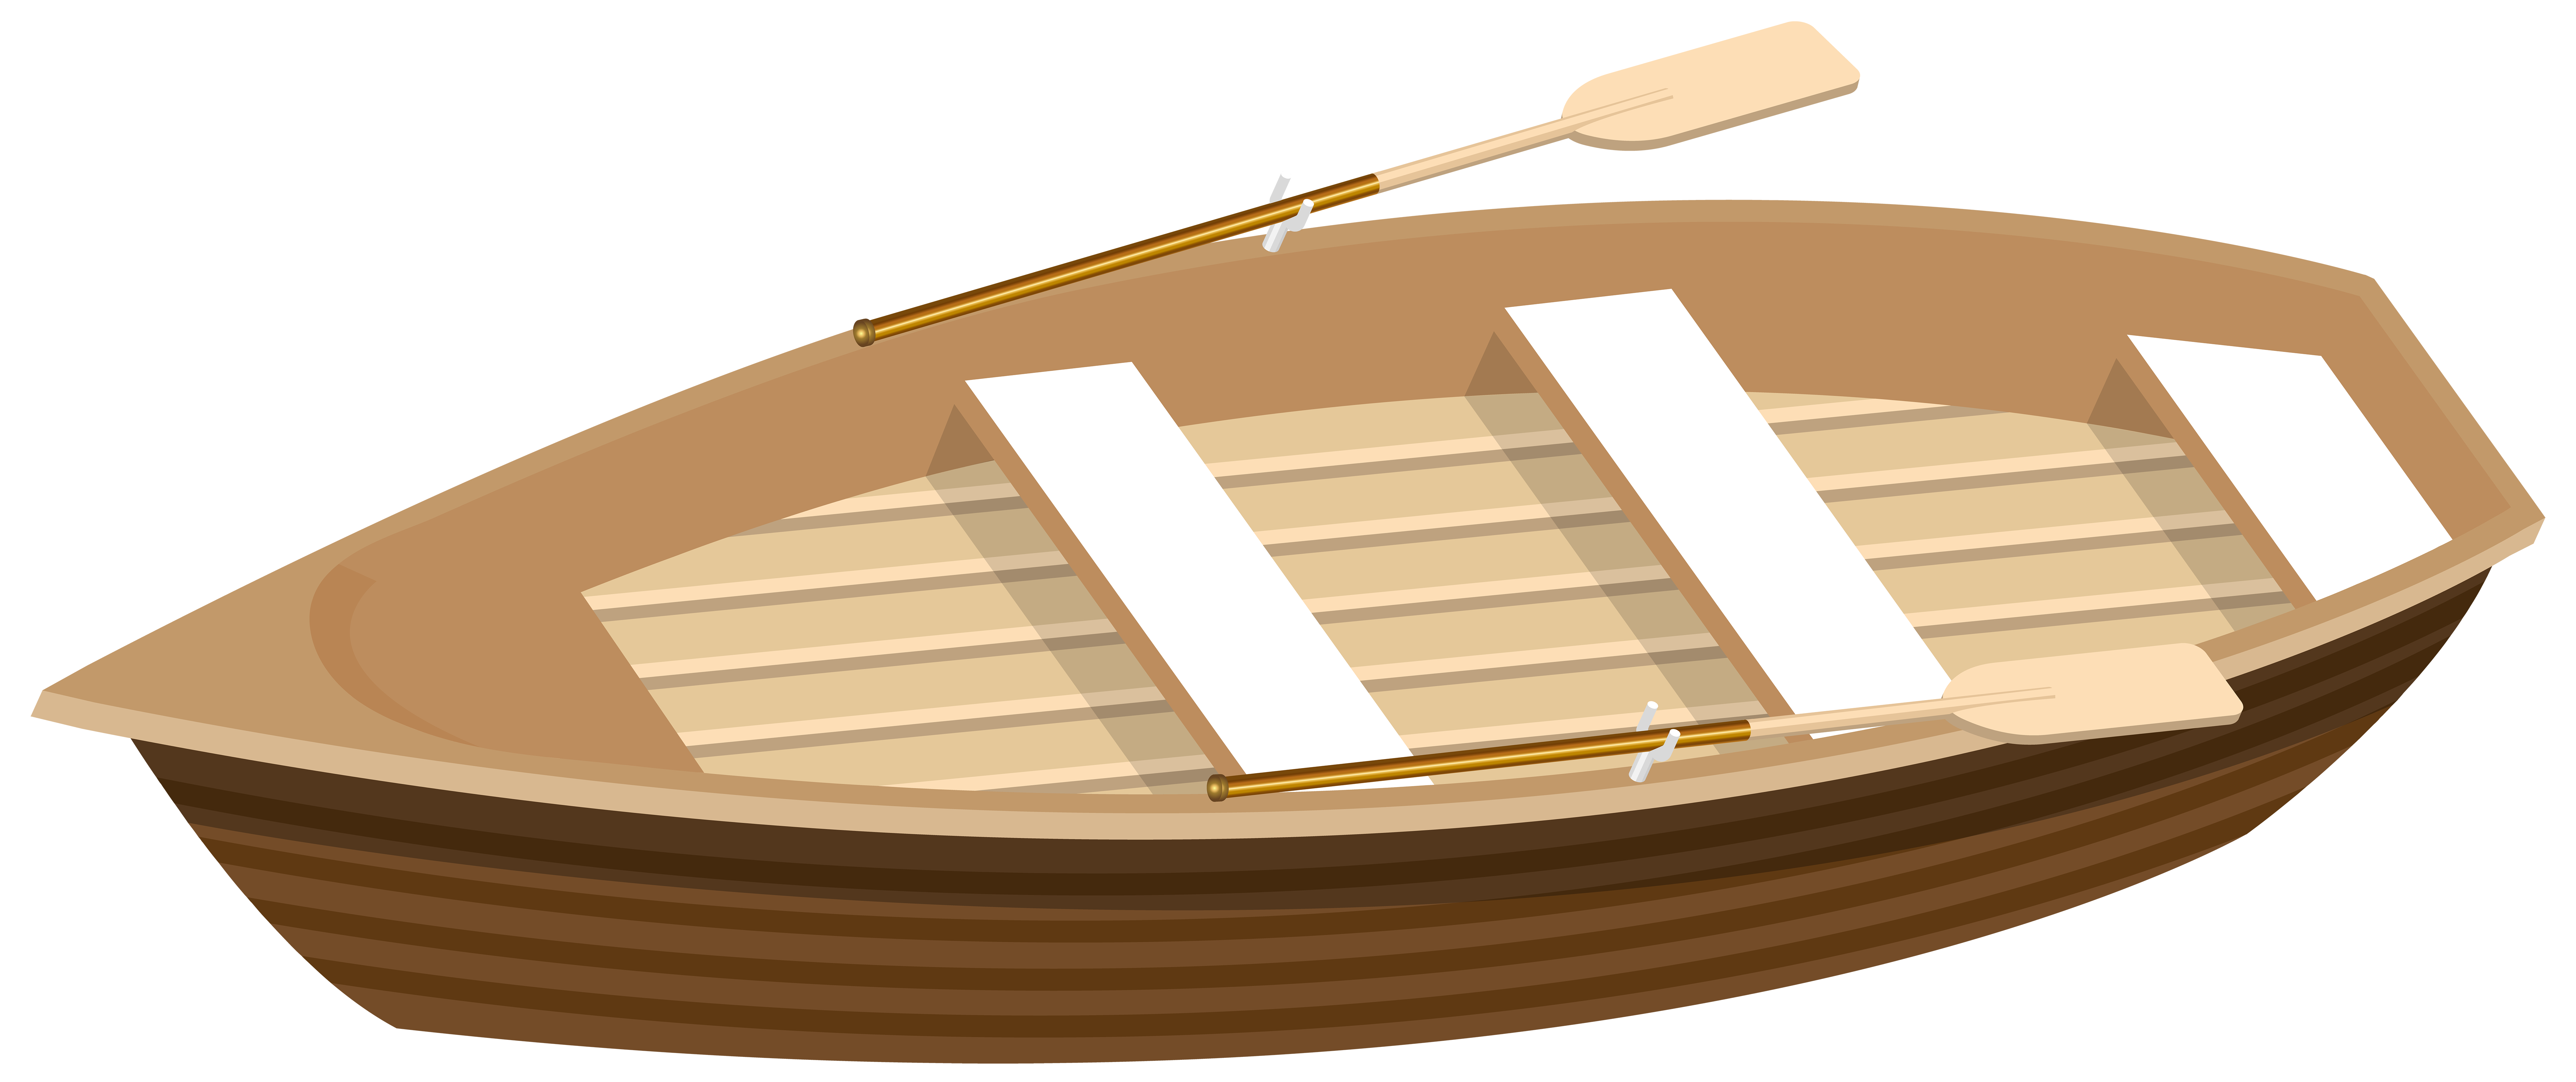 clip art wooden boat - photo #15